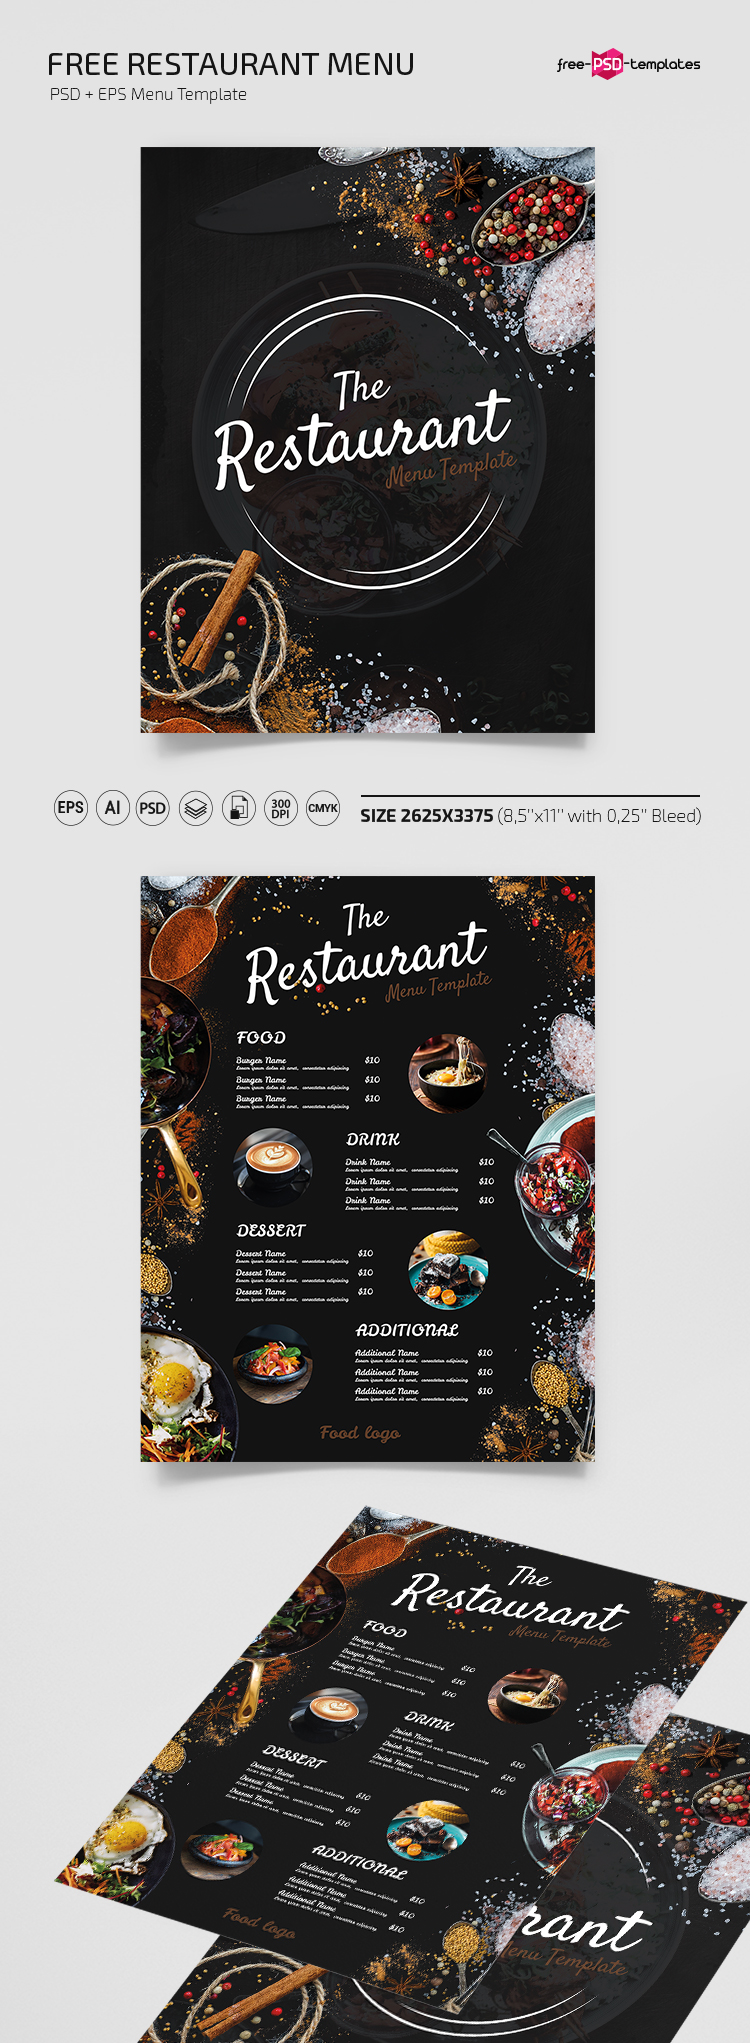 free-restaurant-menu-templates-in-psd-vector-ai-eps-free-psd-templates